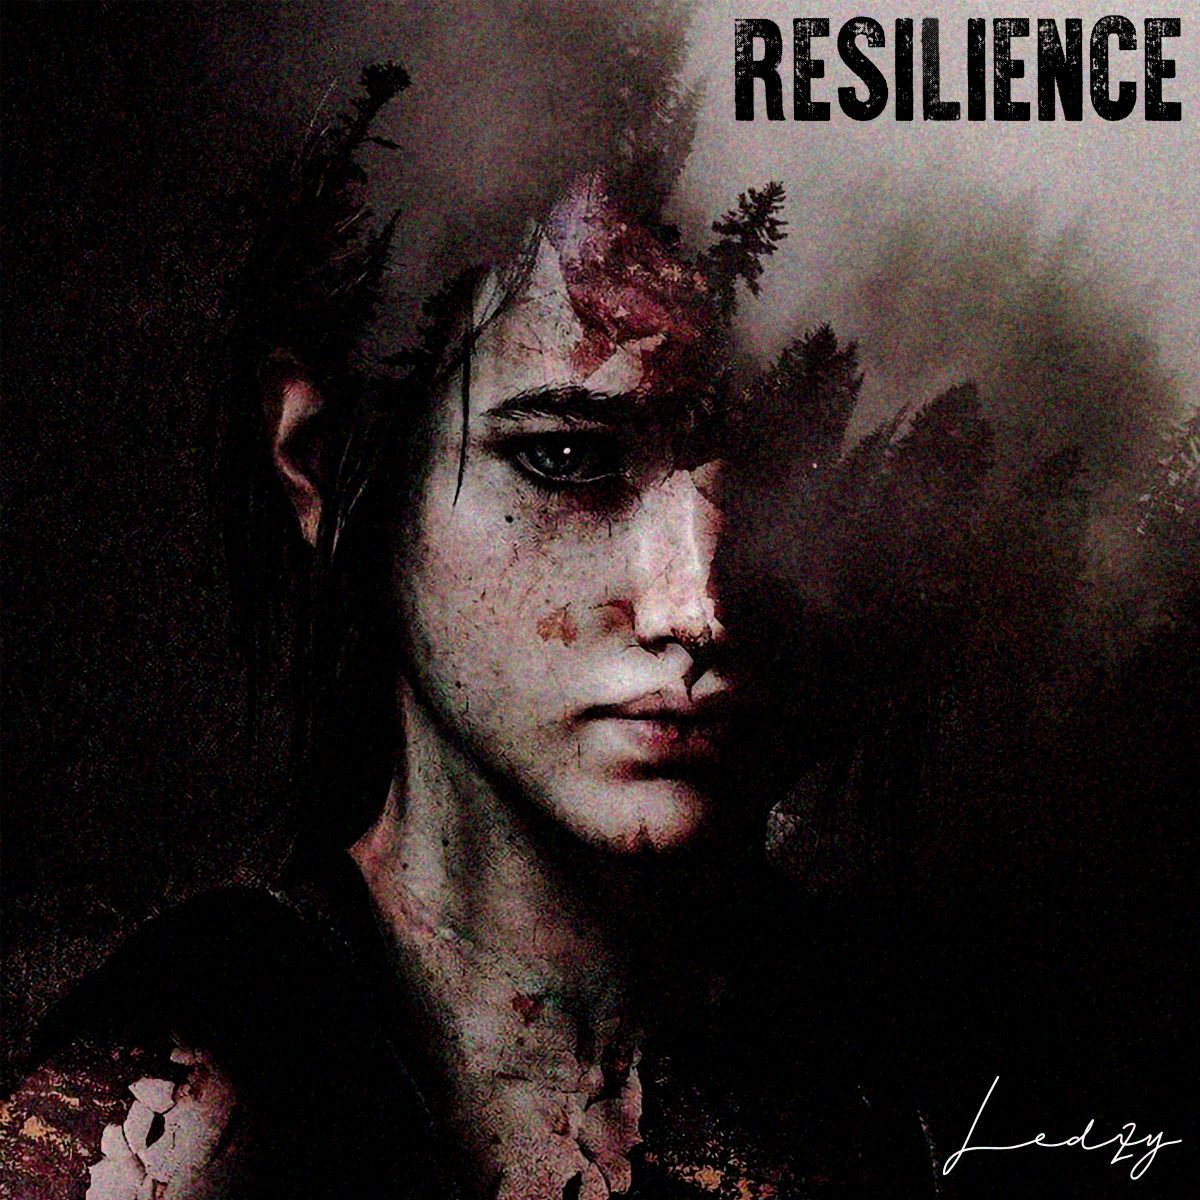 Ledzy - “Resilience”